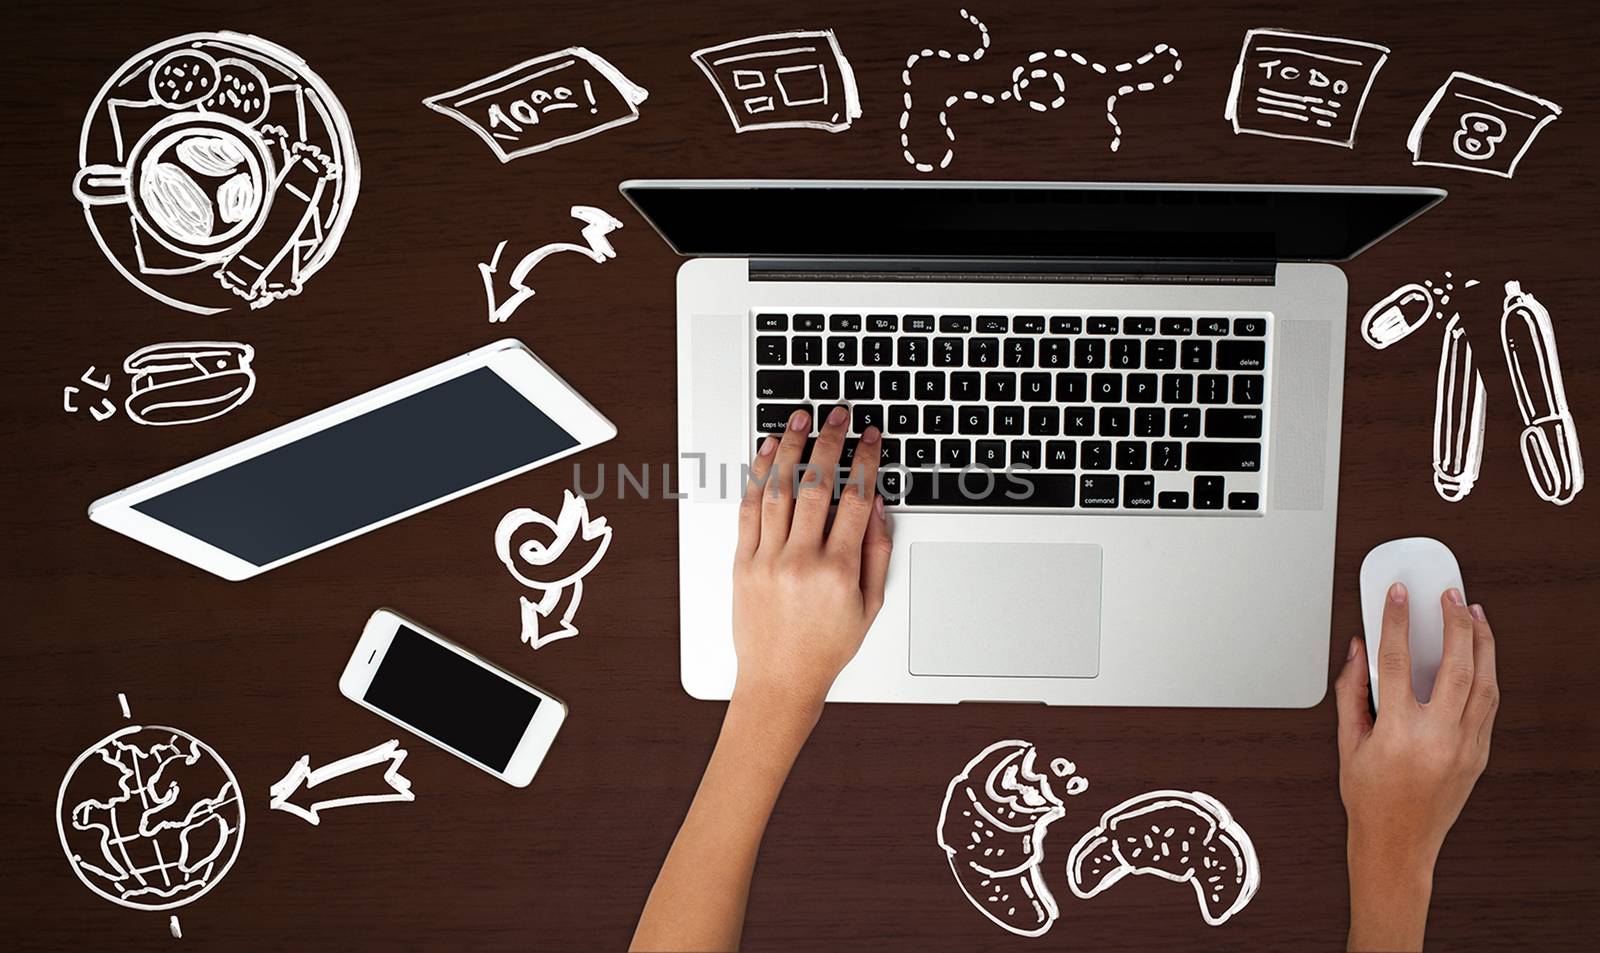 Hand operating laptop, technology background